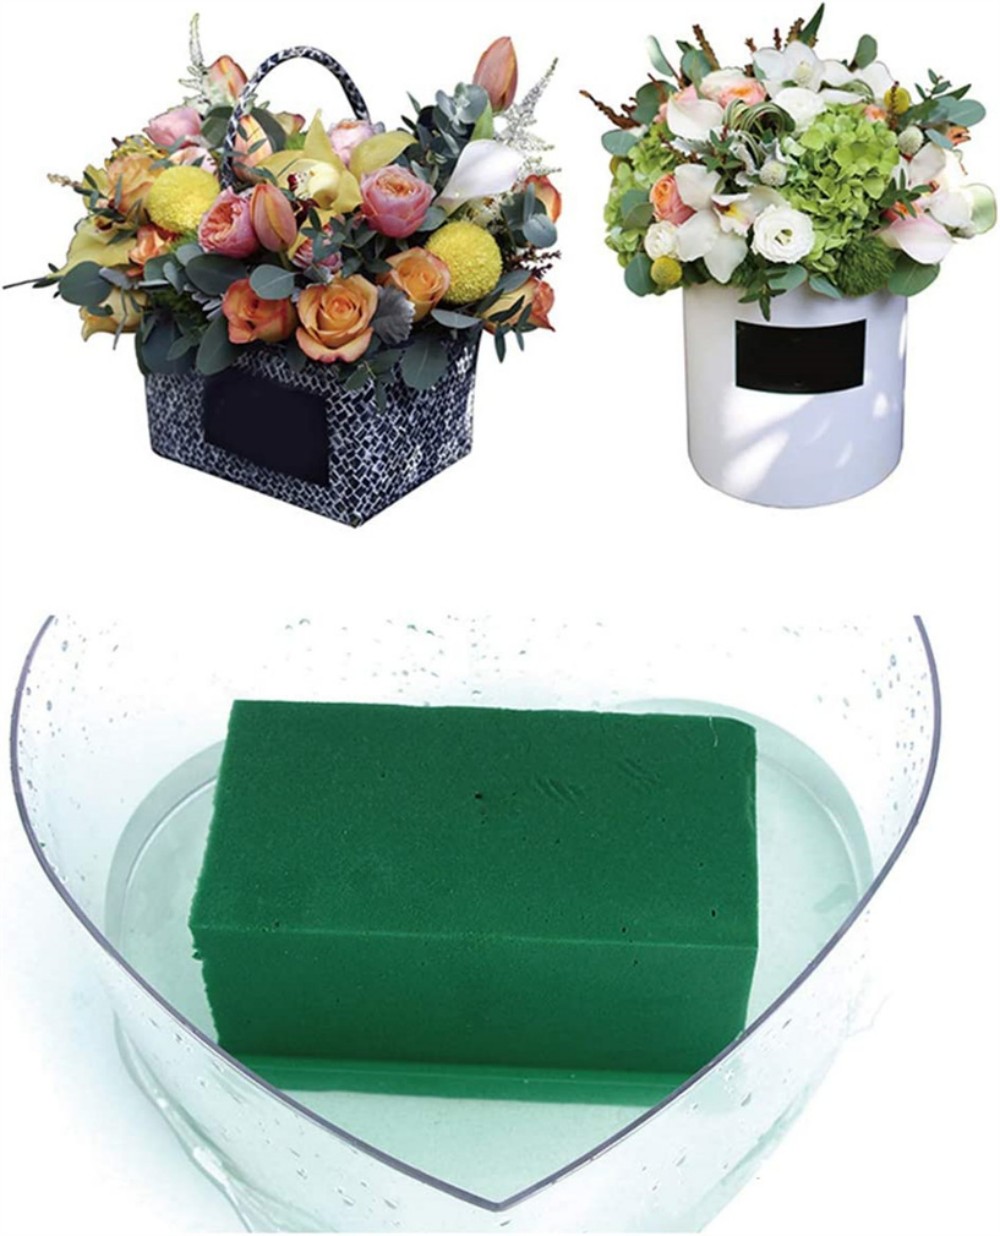 Floral Foam Bricks, Happon Florist Foam Green Blocks Supplies for